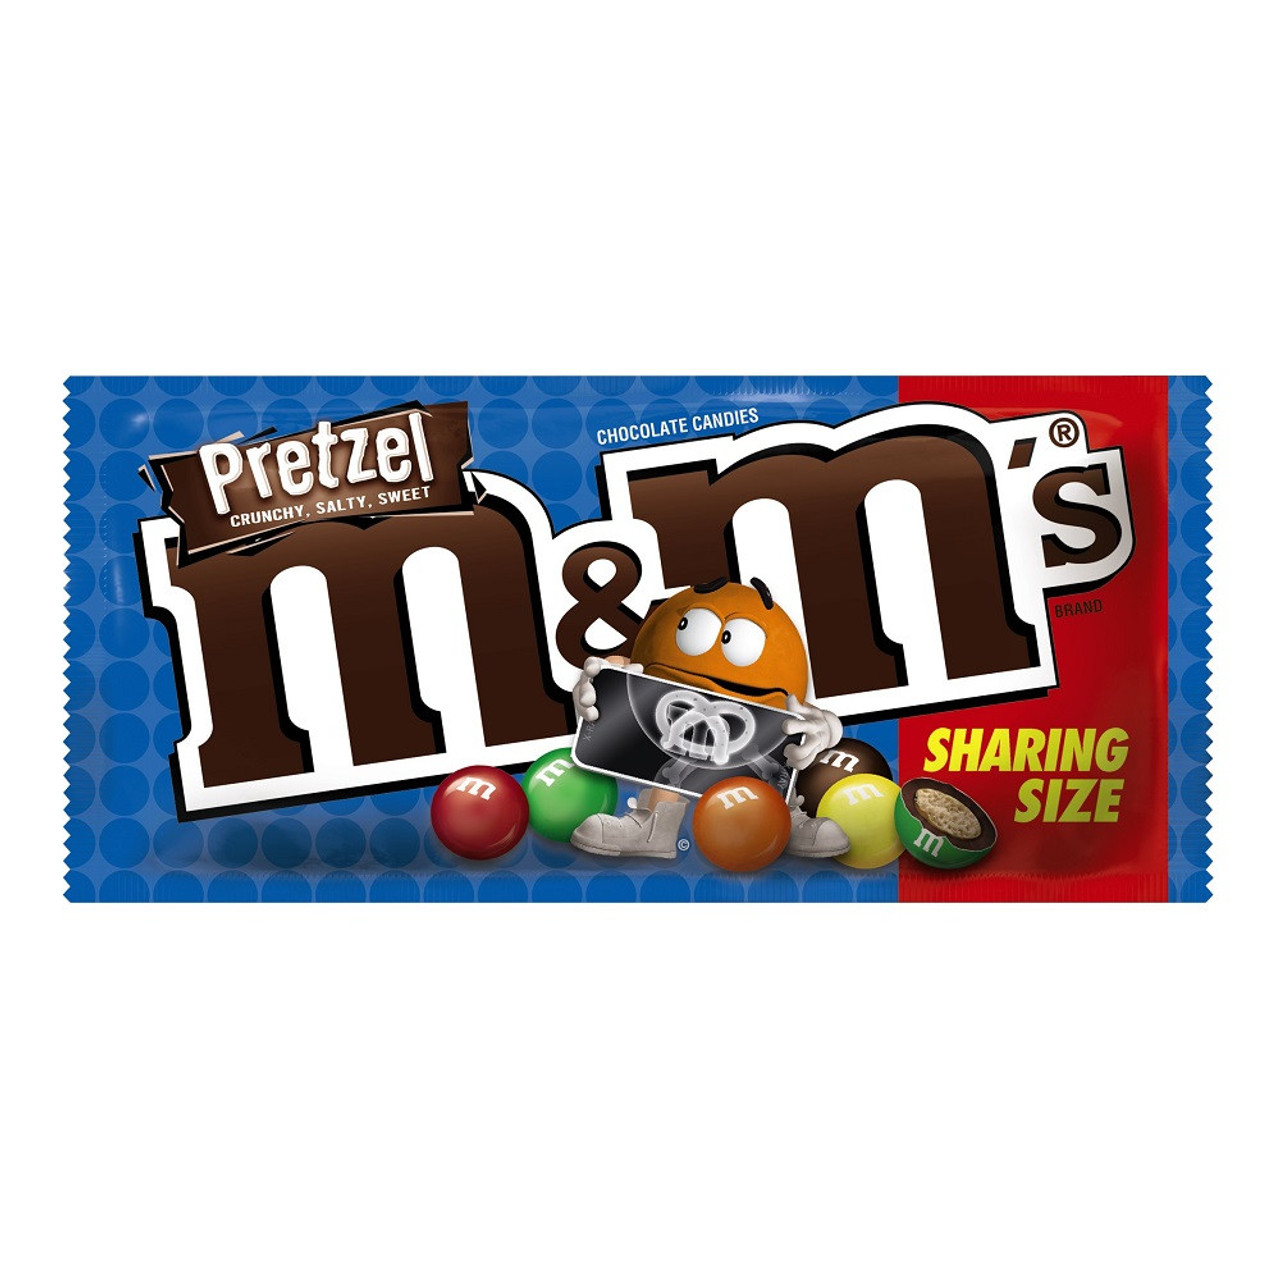 M & M Chocolate Candies, Pretzel, Sharing Size - 24 pack, 2.83 oz packs